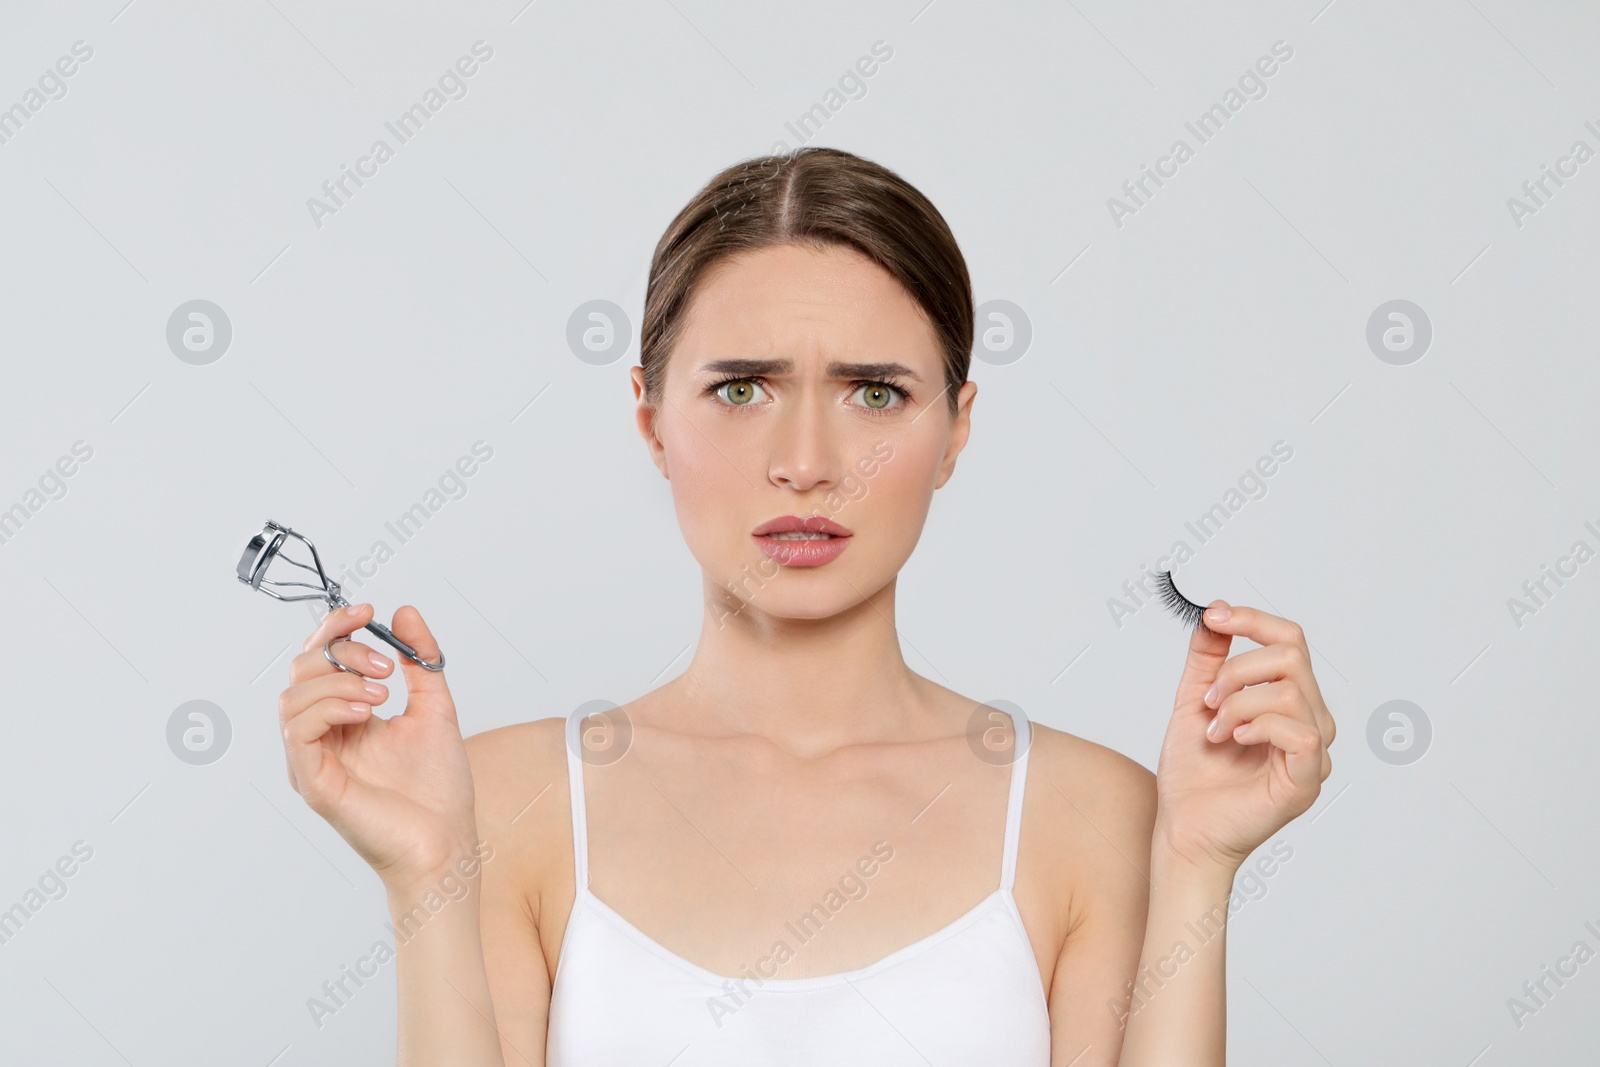 Photo of Emotional woman with curler and false eyelashes on white background